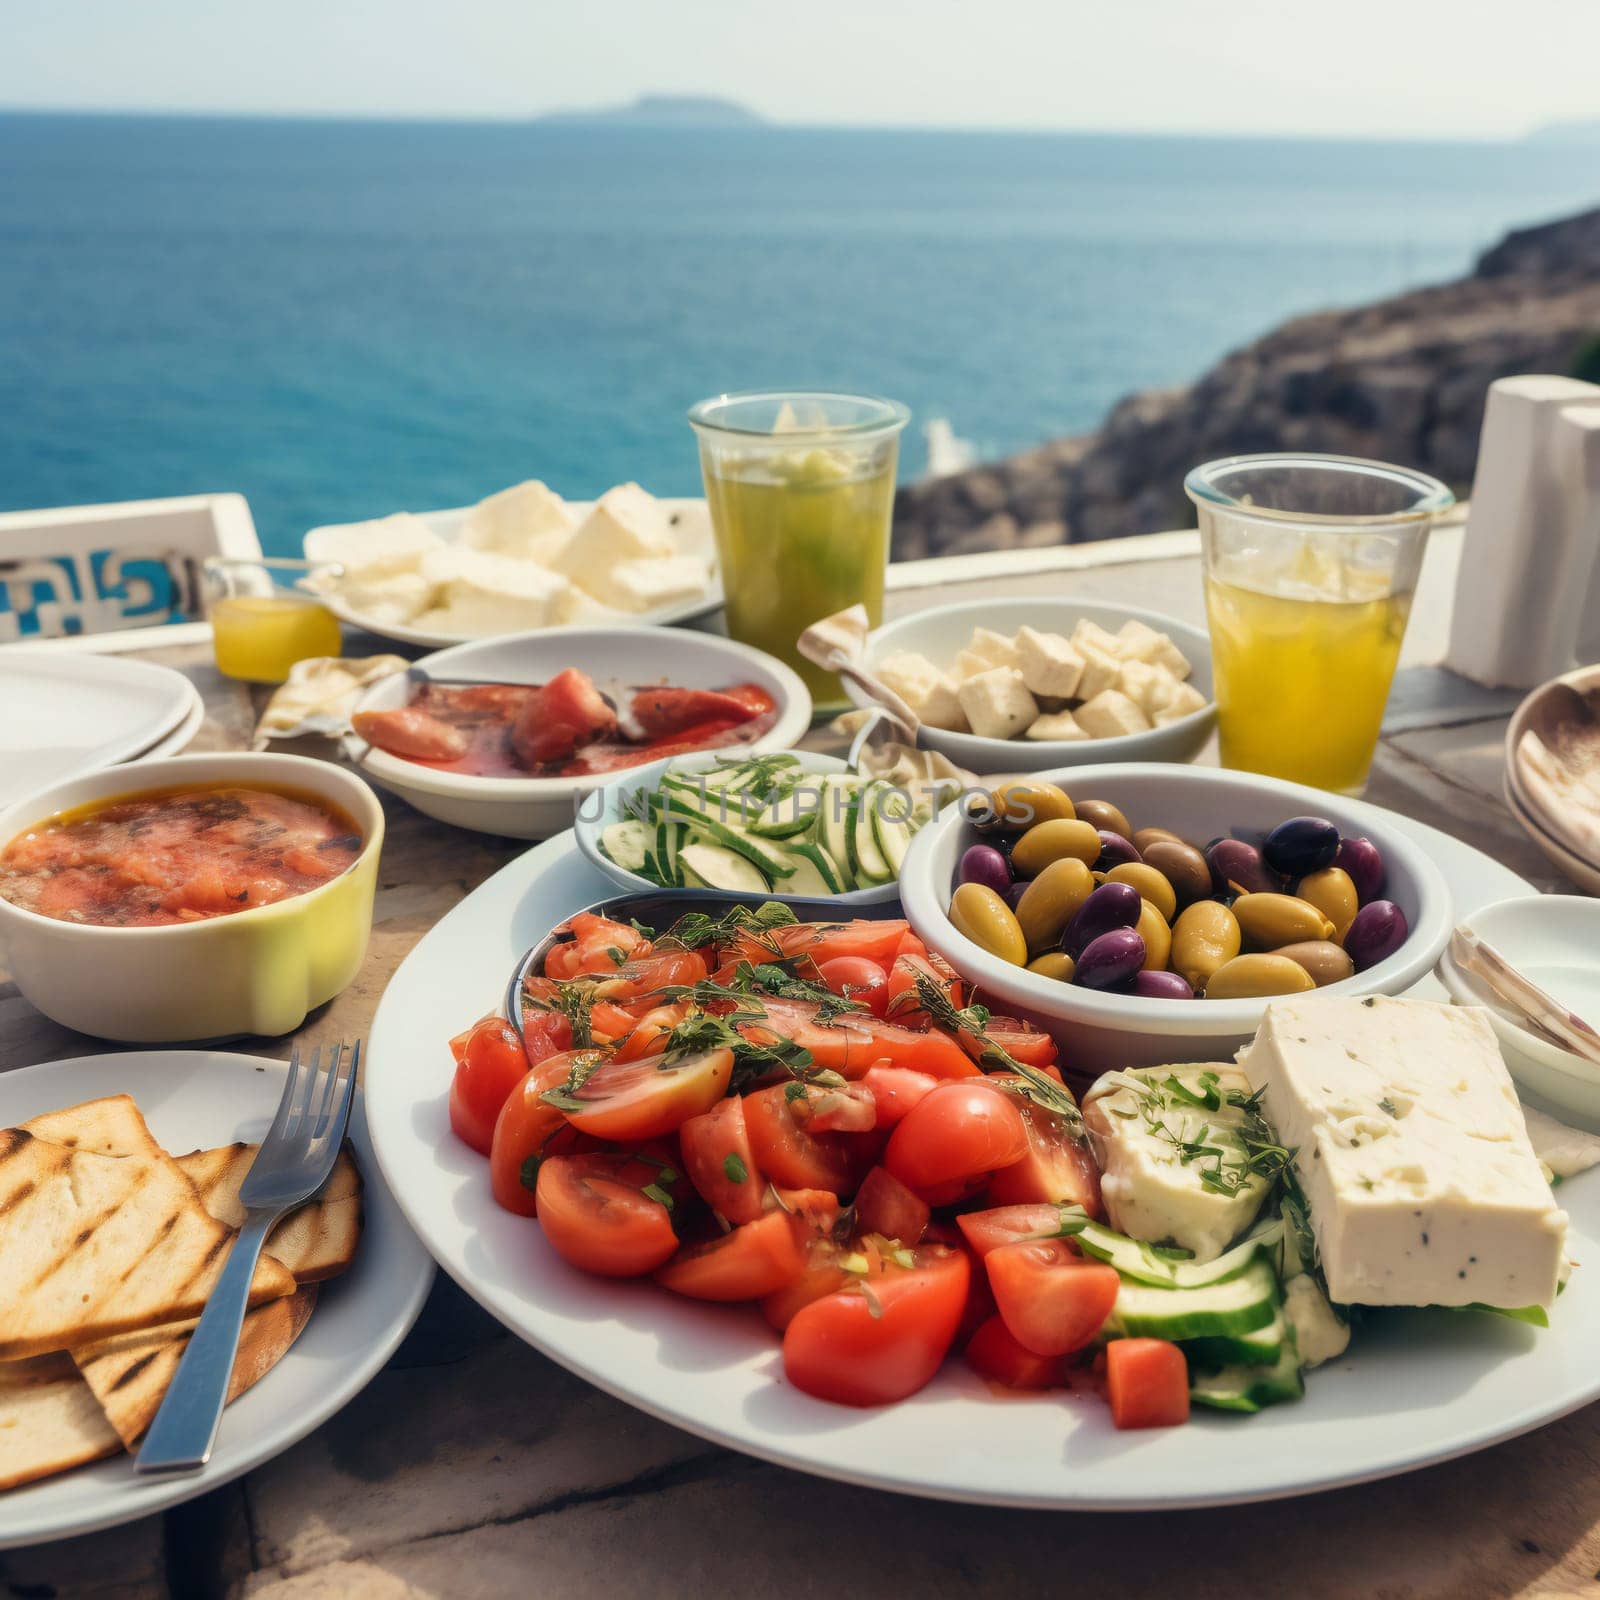 Italian or Mediterranean food on sea background. Tomato mozzarella basil leaves feta olives and olive oil on wooden table.